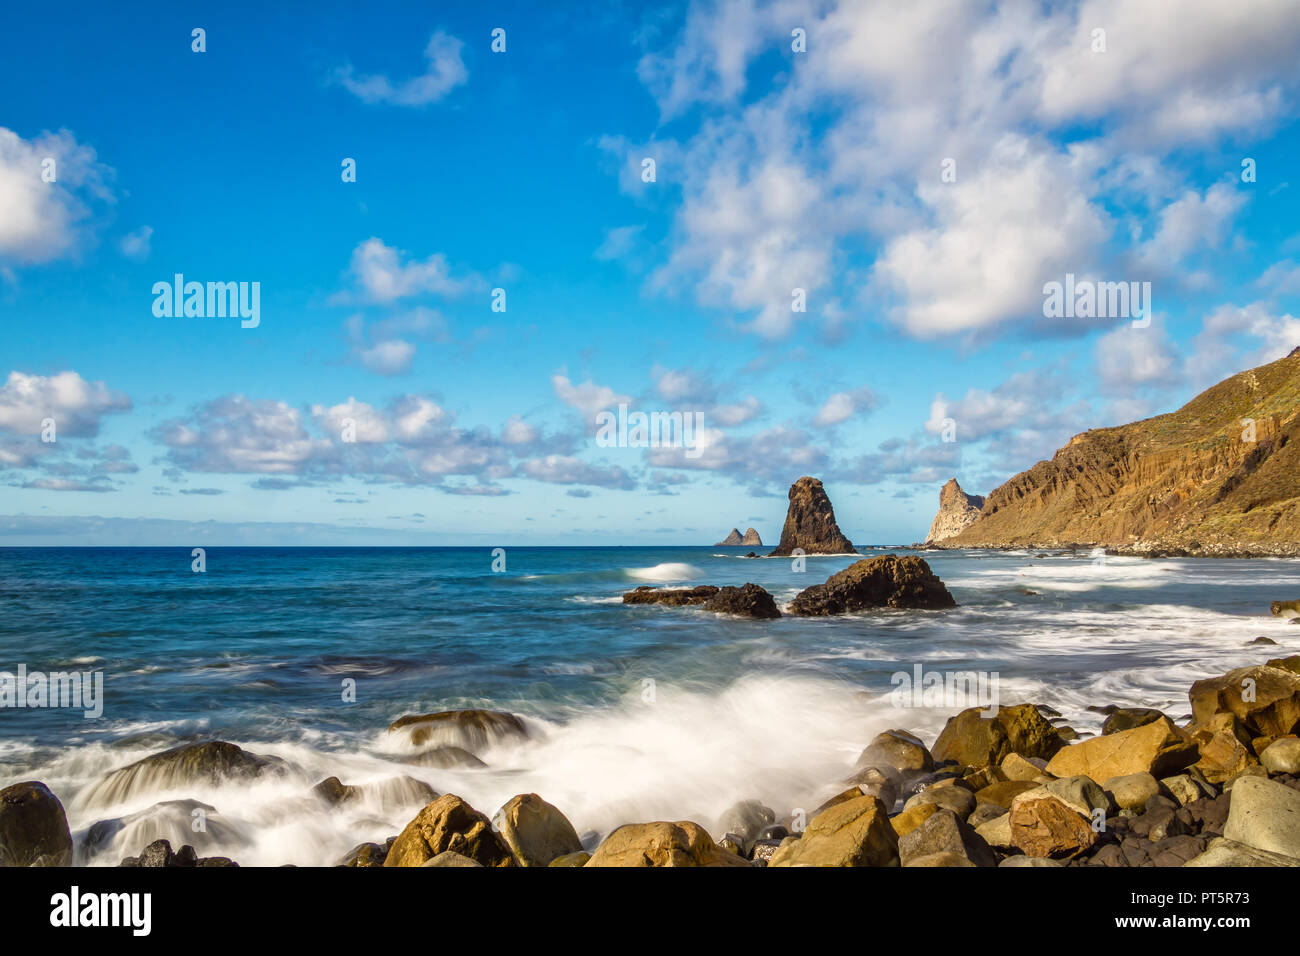 Beautiful view on the splashing waves of the rough coast at the Benijo Beach of Tenerife - Spain. Stock Photo